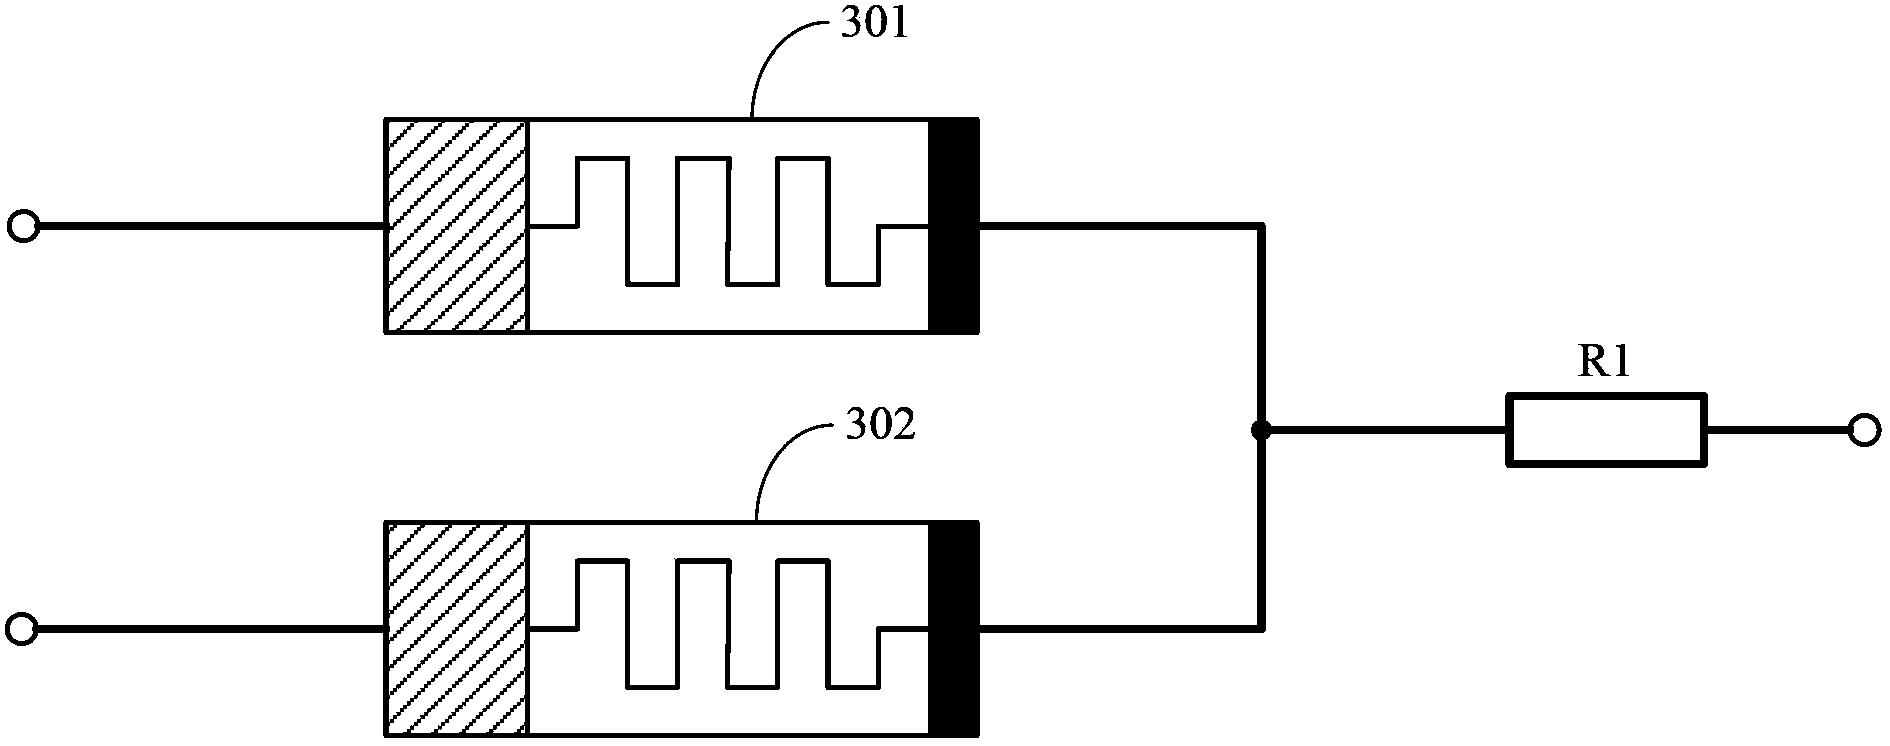 A memristor-based logic gate circuit